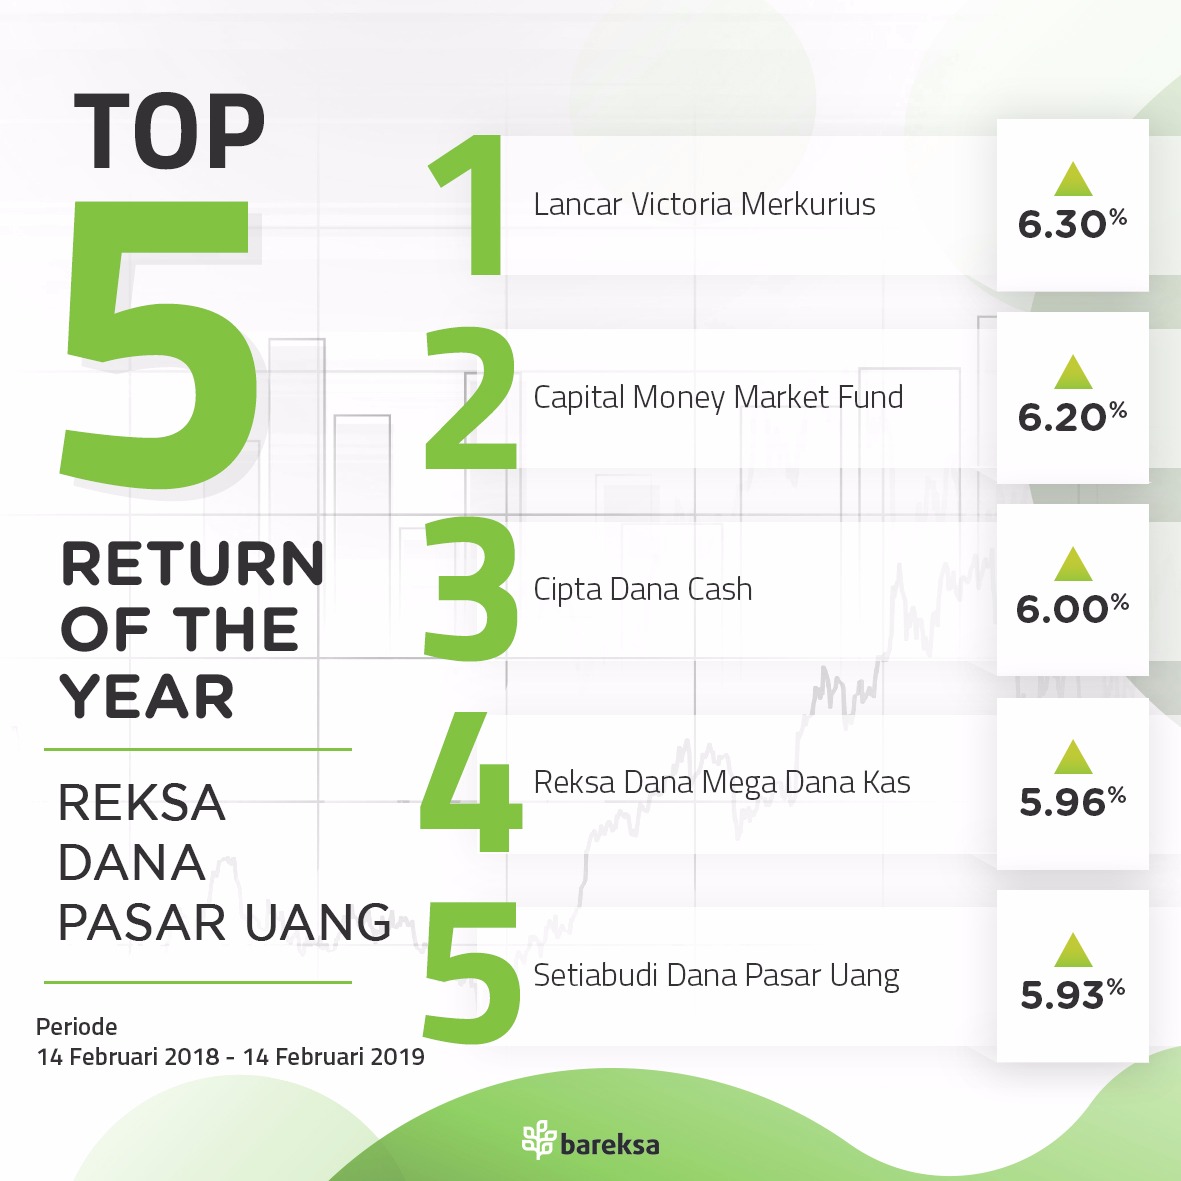 Top 5 Reksadana Pasar Uang Bareksa Setahun, Pilihan Untuk Investor Pemula